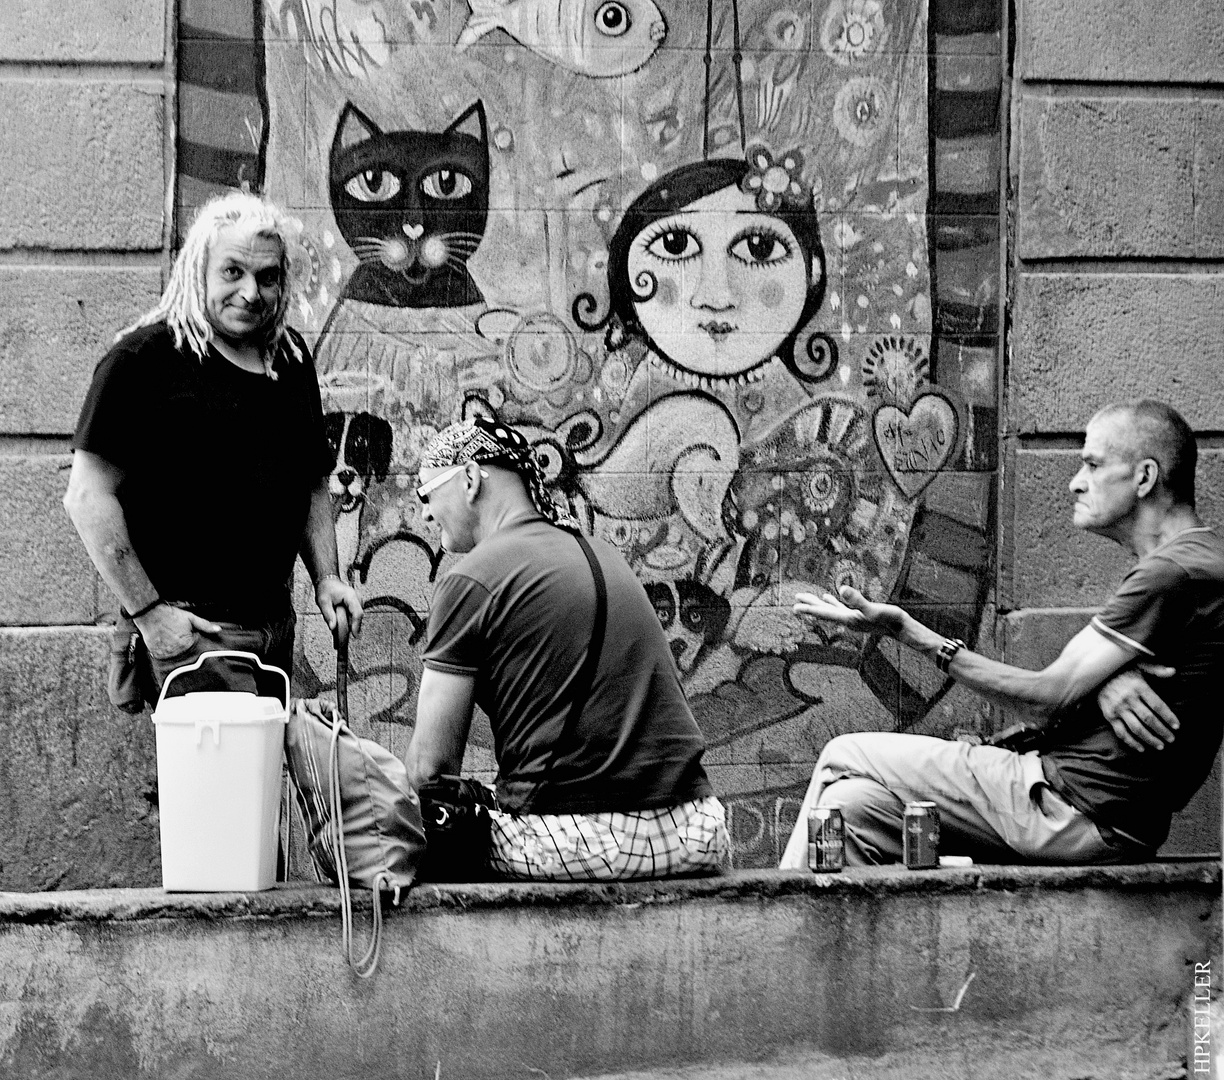 Some days ago in Barcelona, &#8203;&#8203;... streetculture in the Barri Go&#768;tic.